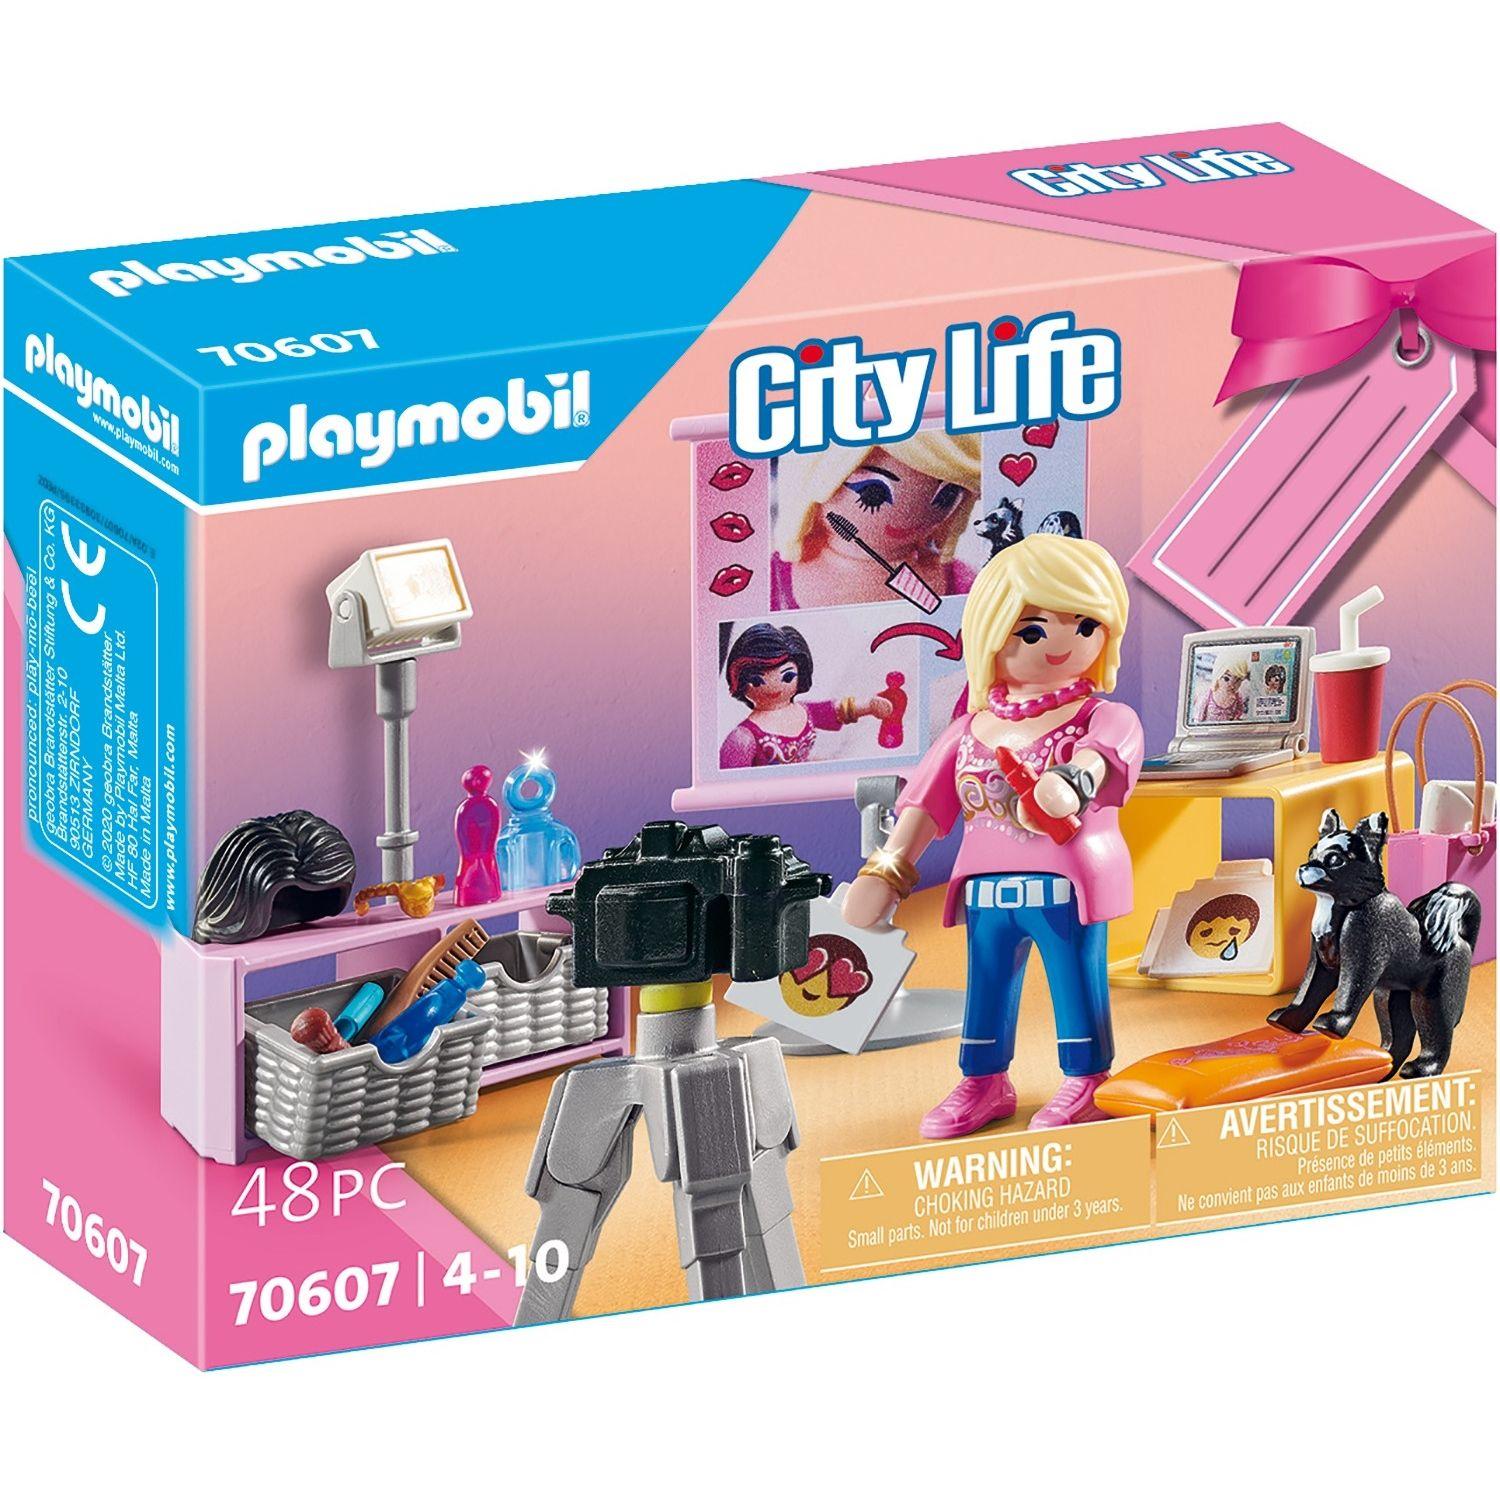 Playmobil City Life 